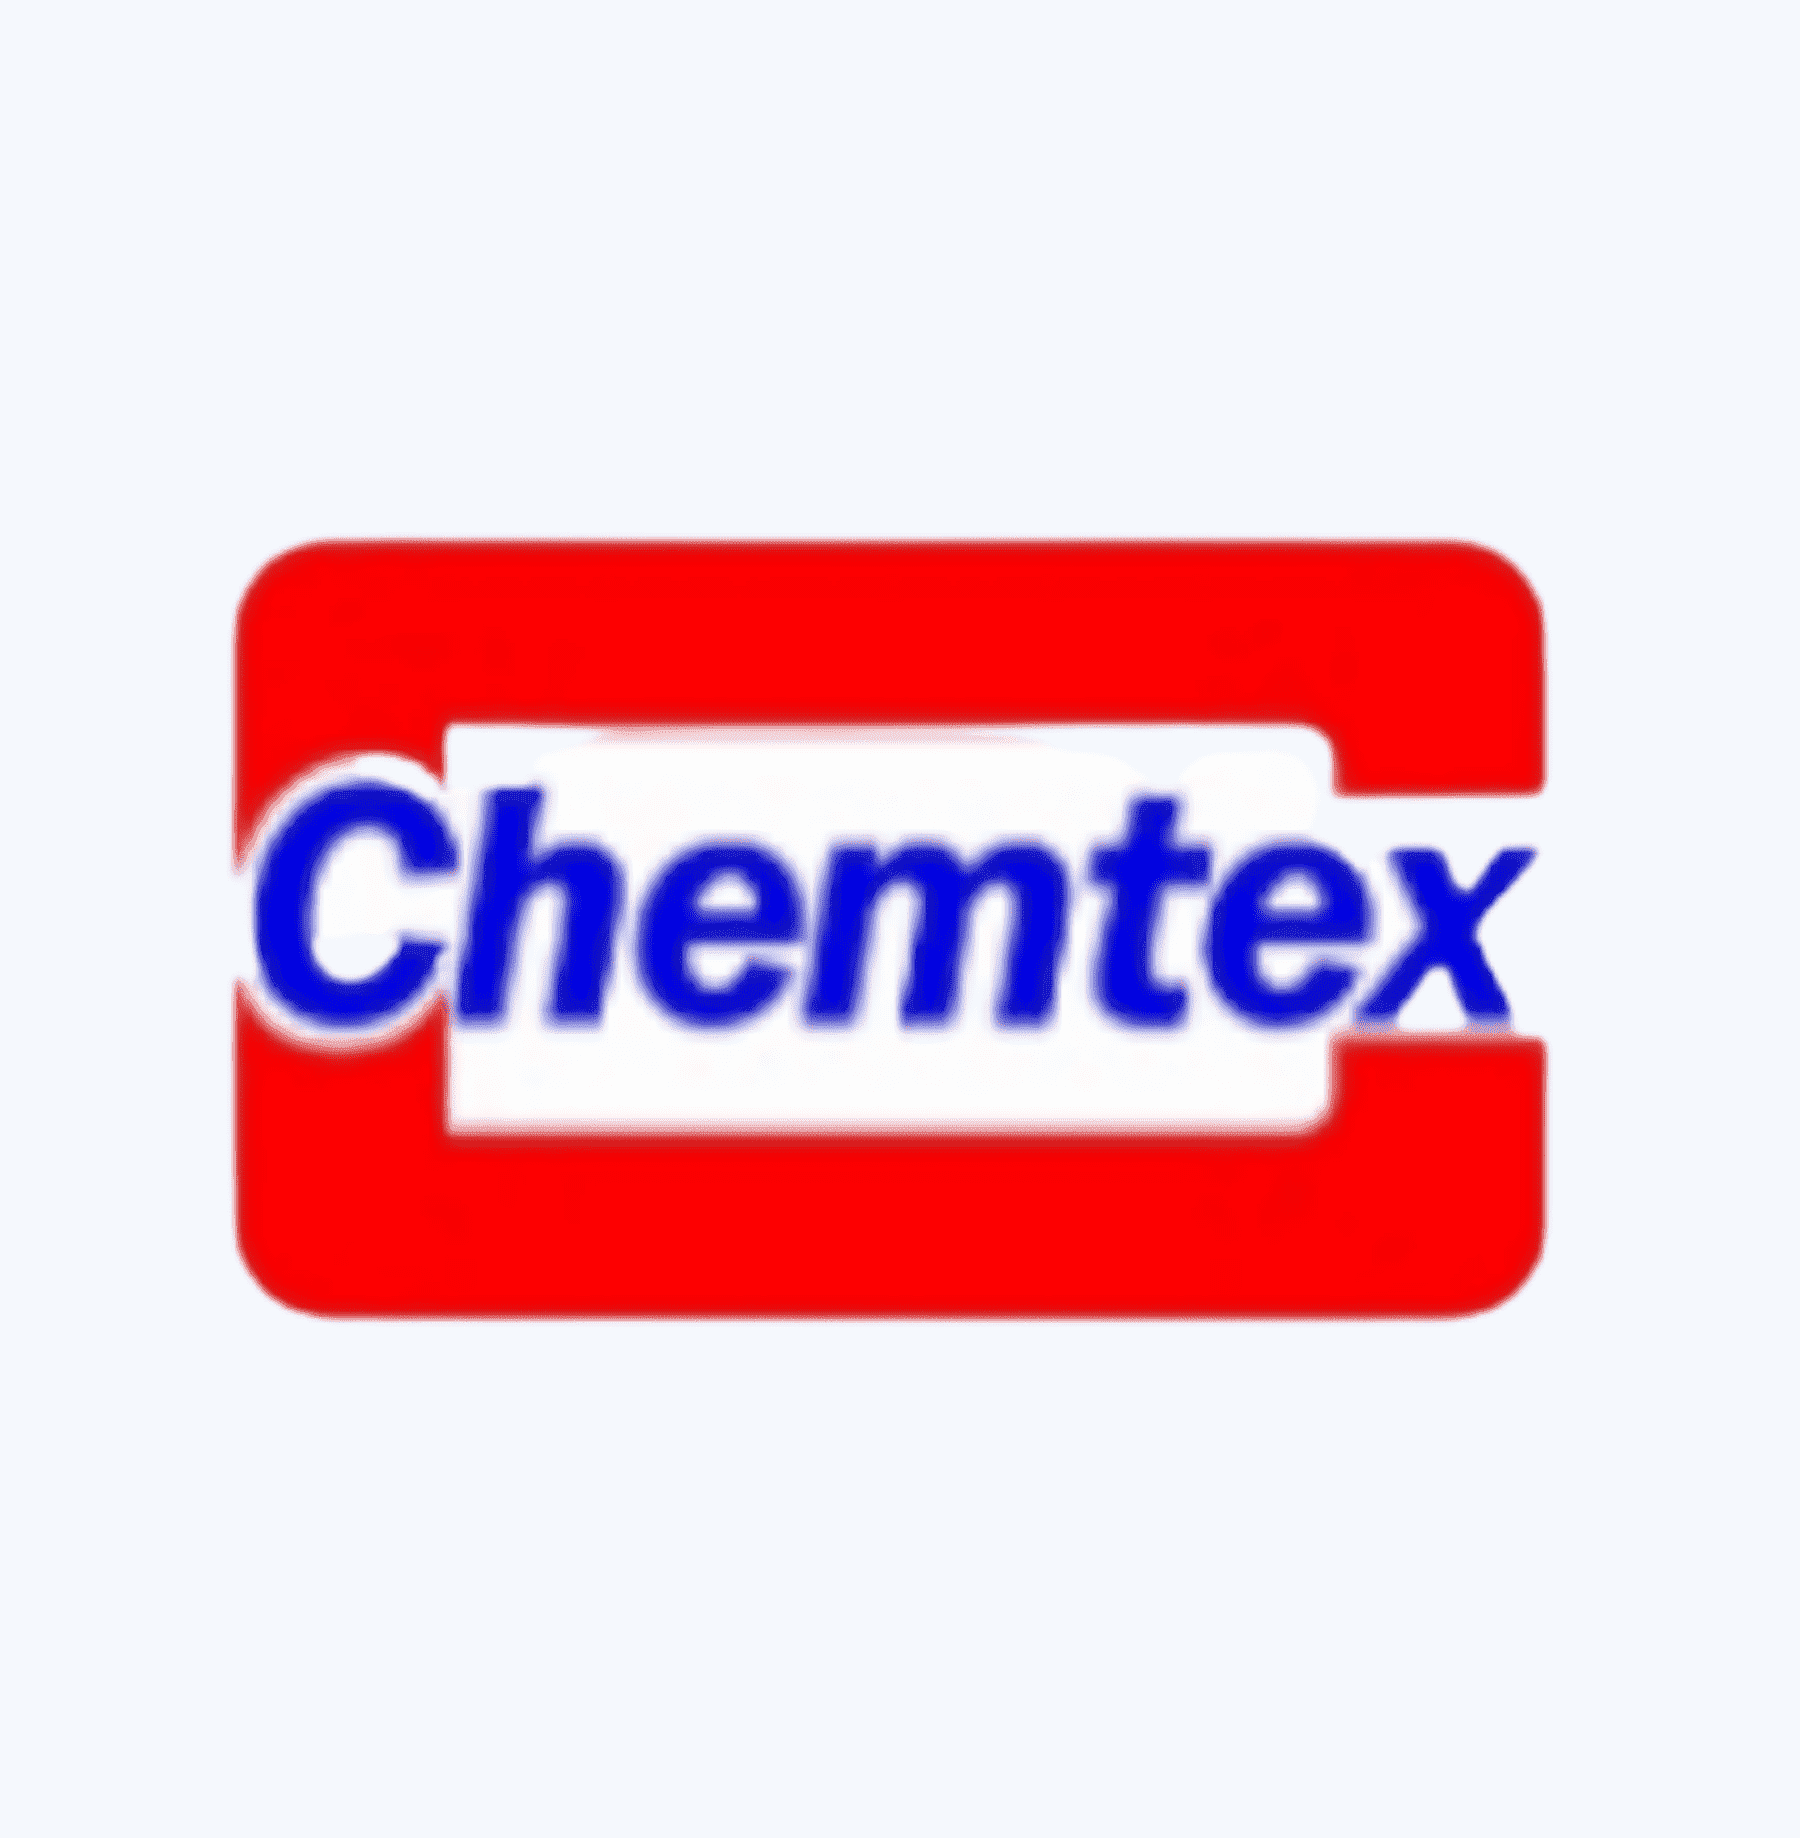 chemtex-logo-logo